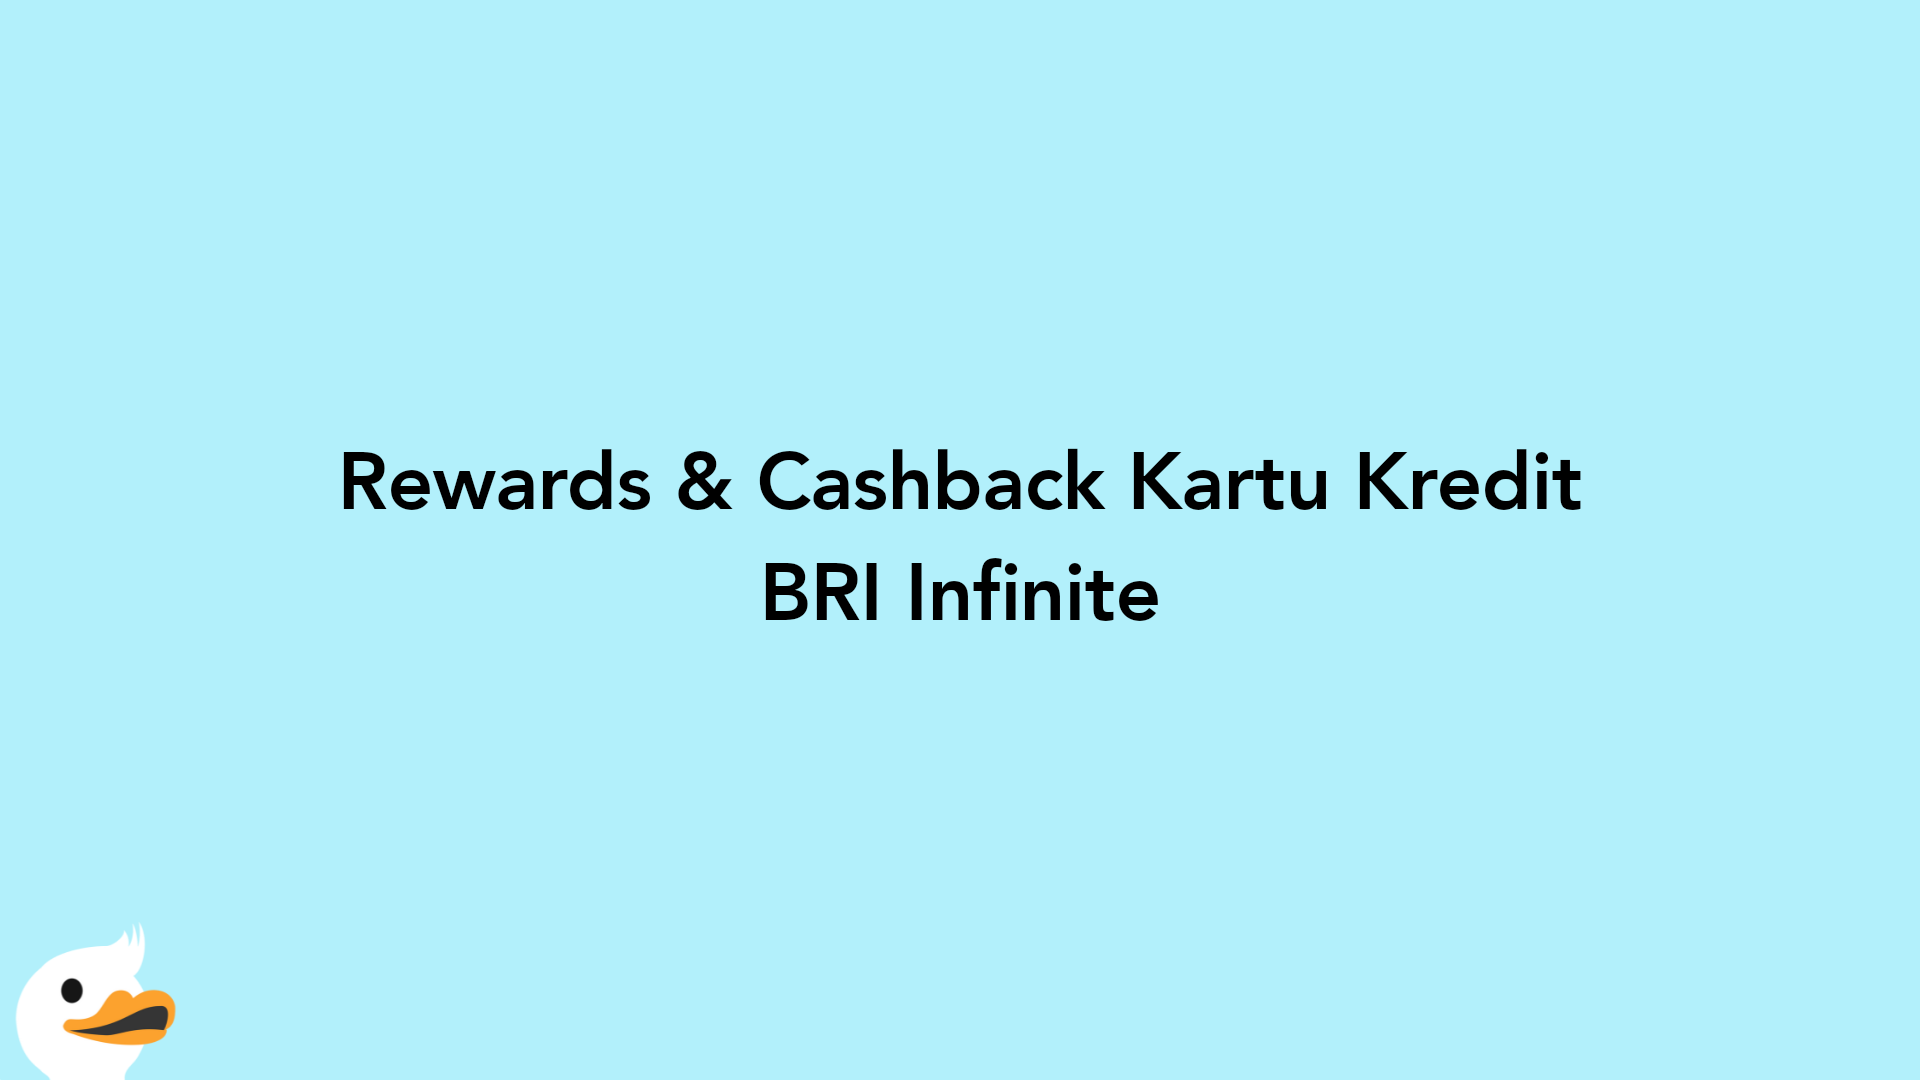 Rewards & Cashback Kartu Kredit BRI Infinite